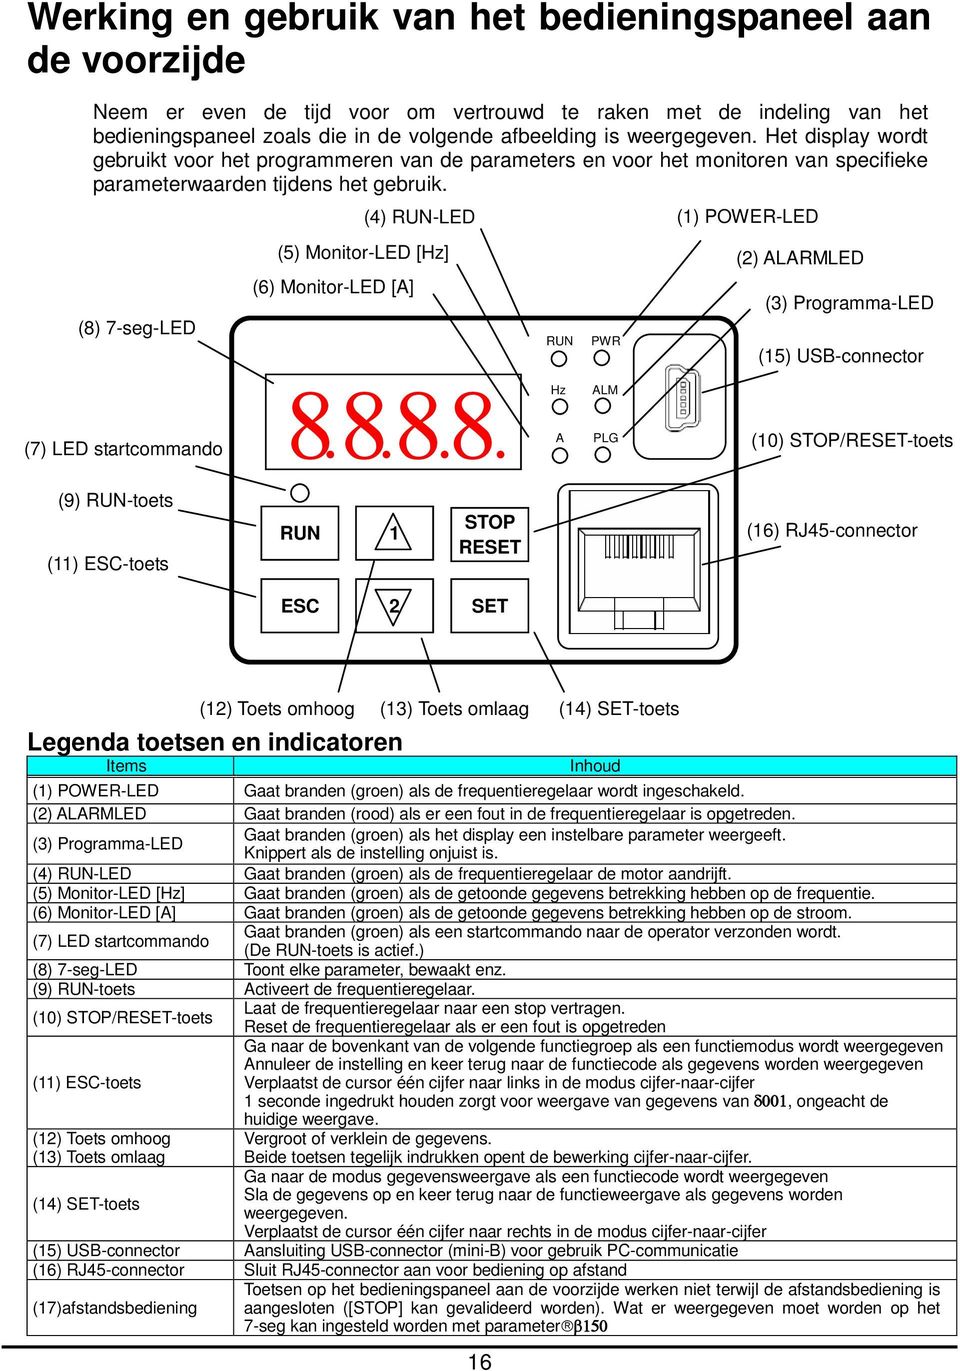 (4) RUN-LED (1) POWER-LED (8) 7-seg-LED (5) Monitor-LED [Hz] (6) Monitor-LED [A] RUN PWR (2) ALARMLED (3) Programma-LED (15) USB-connector (7) LED startcommando 8888 Hz A ALM PLG (10)